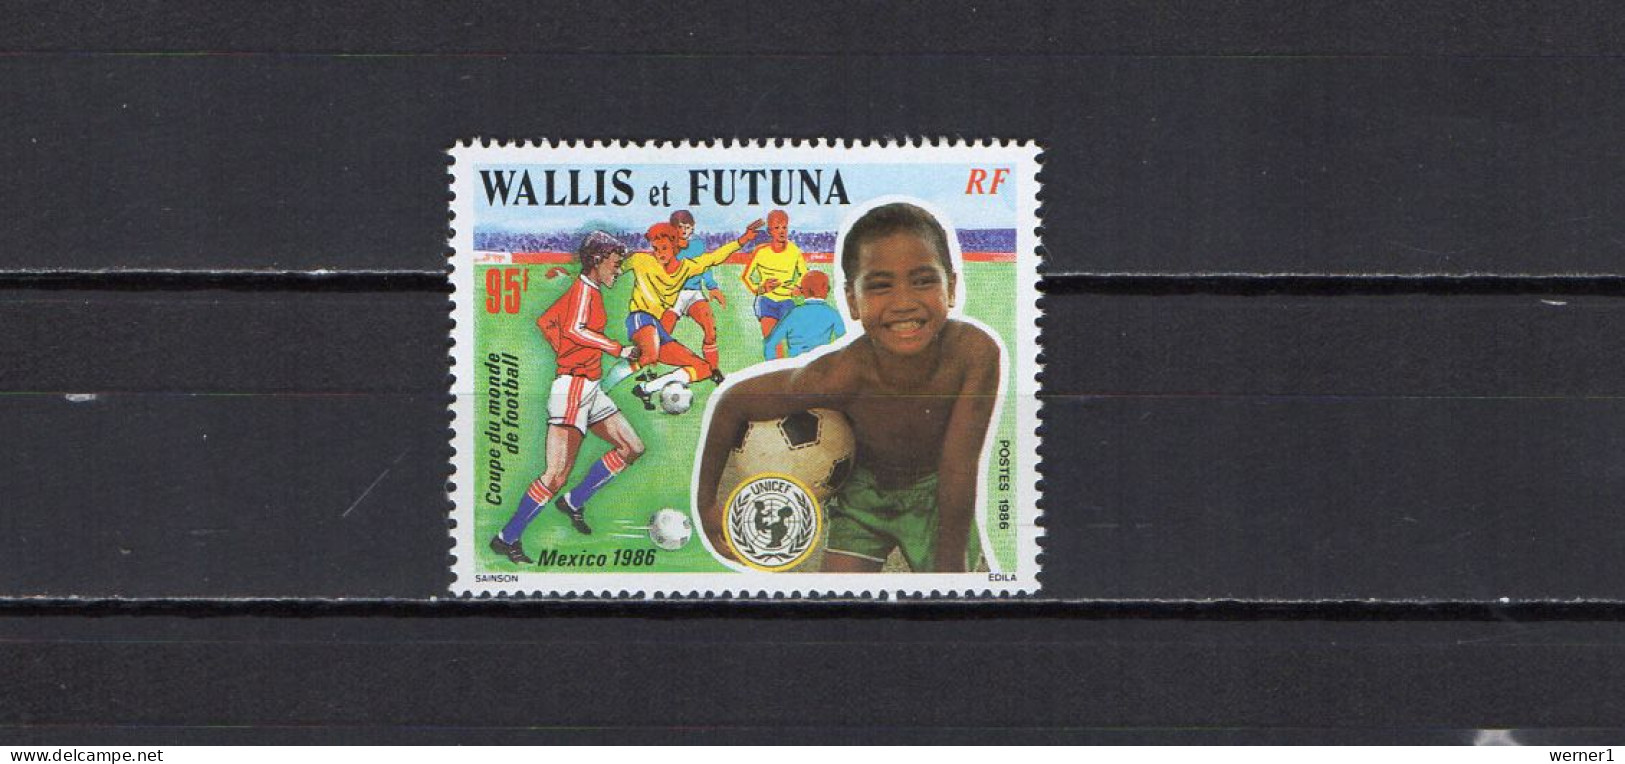 Wallis & Futuna 1986 Football Soccer World Cup Stamp MNH - 1986 – Mexique